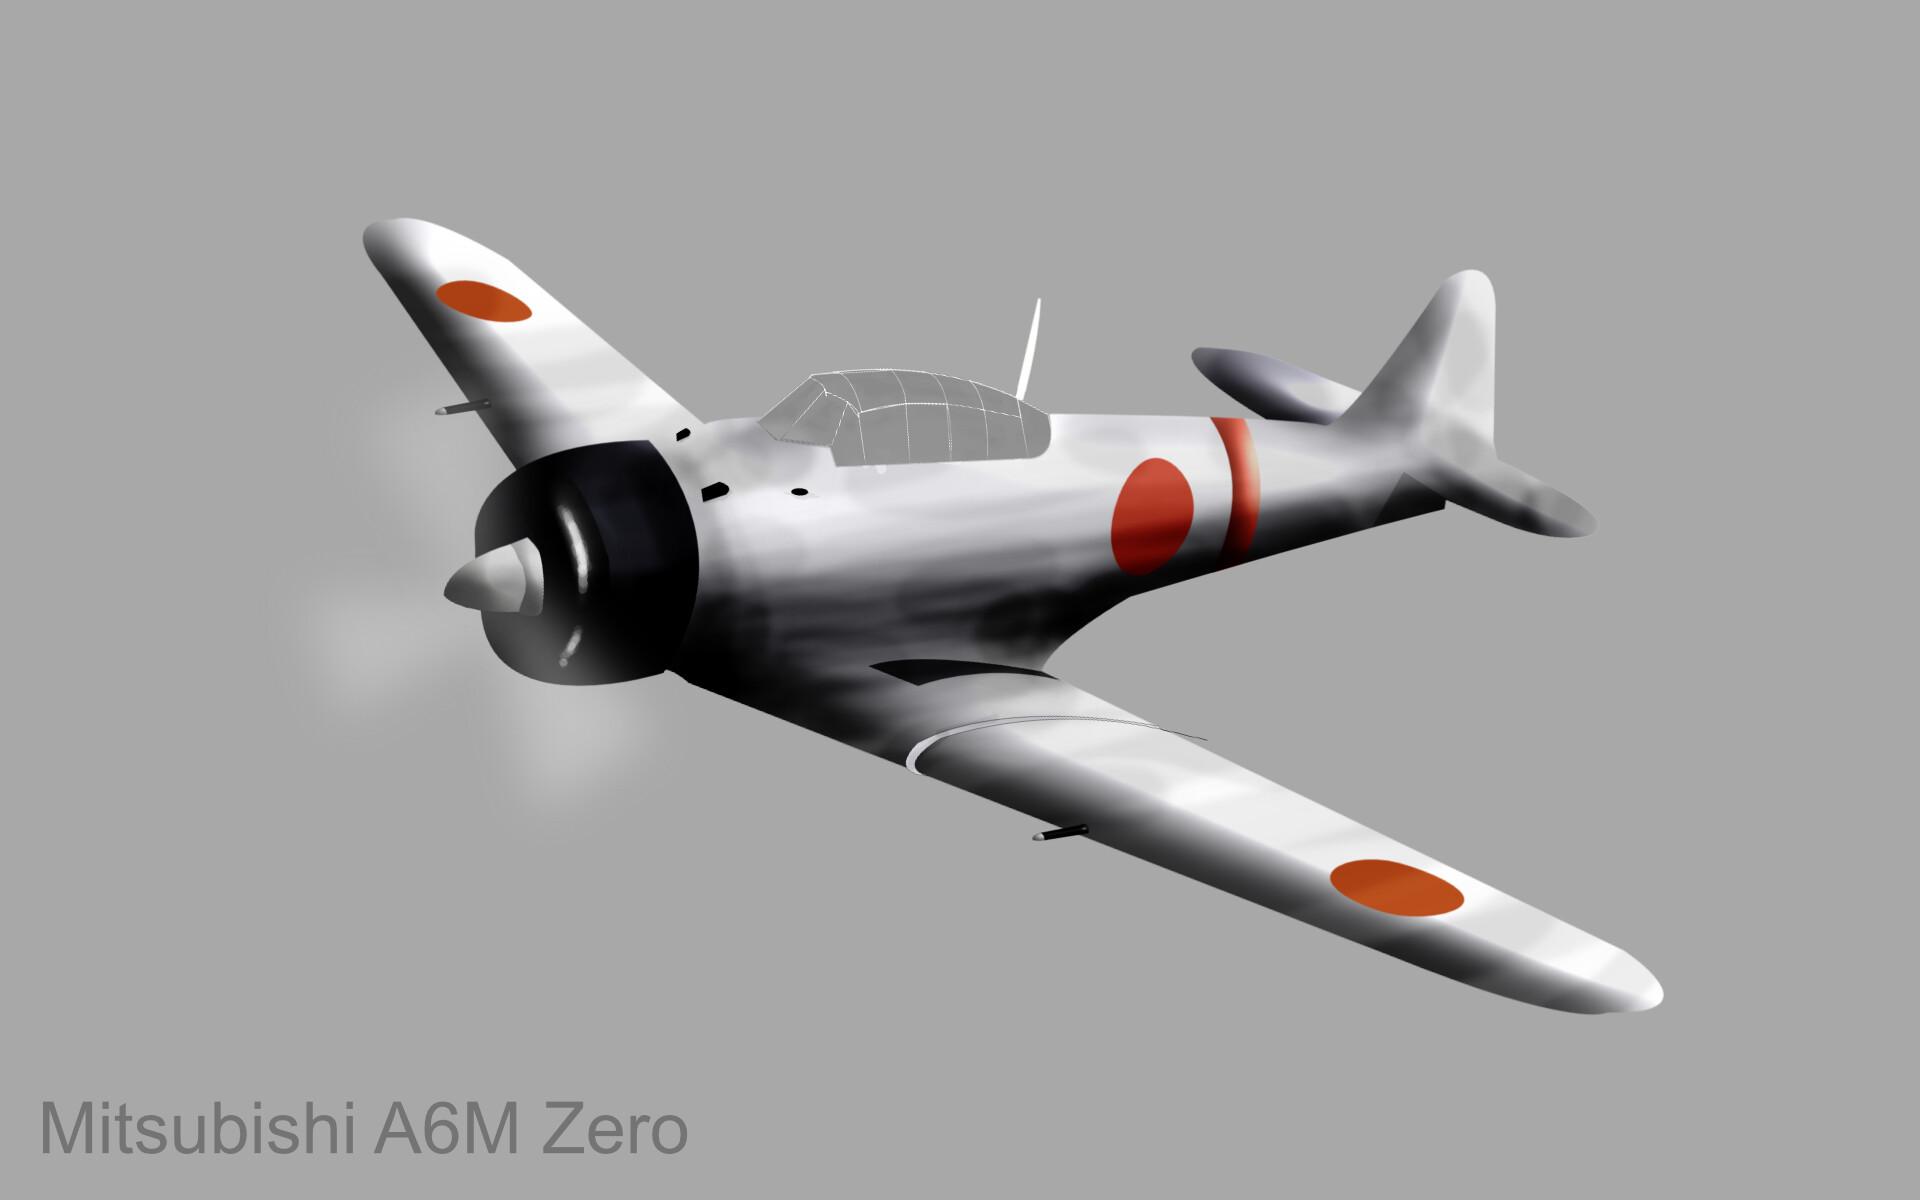 Mitsubishi A6M Zero 'Zeke', Seth Floyd